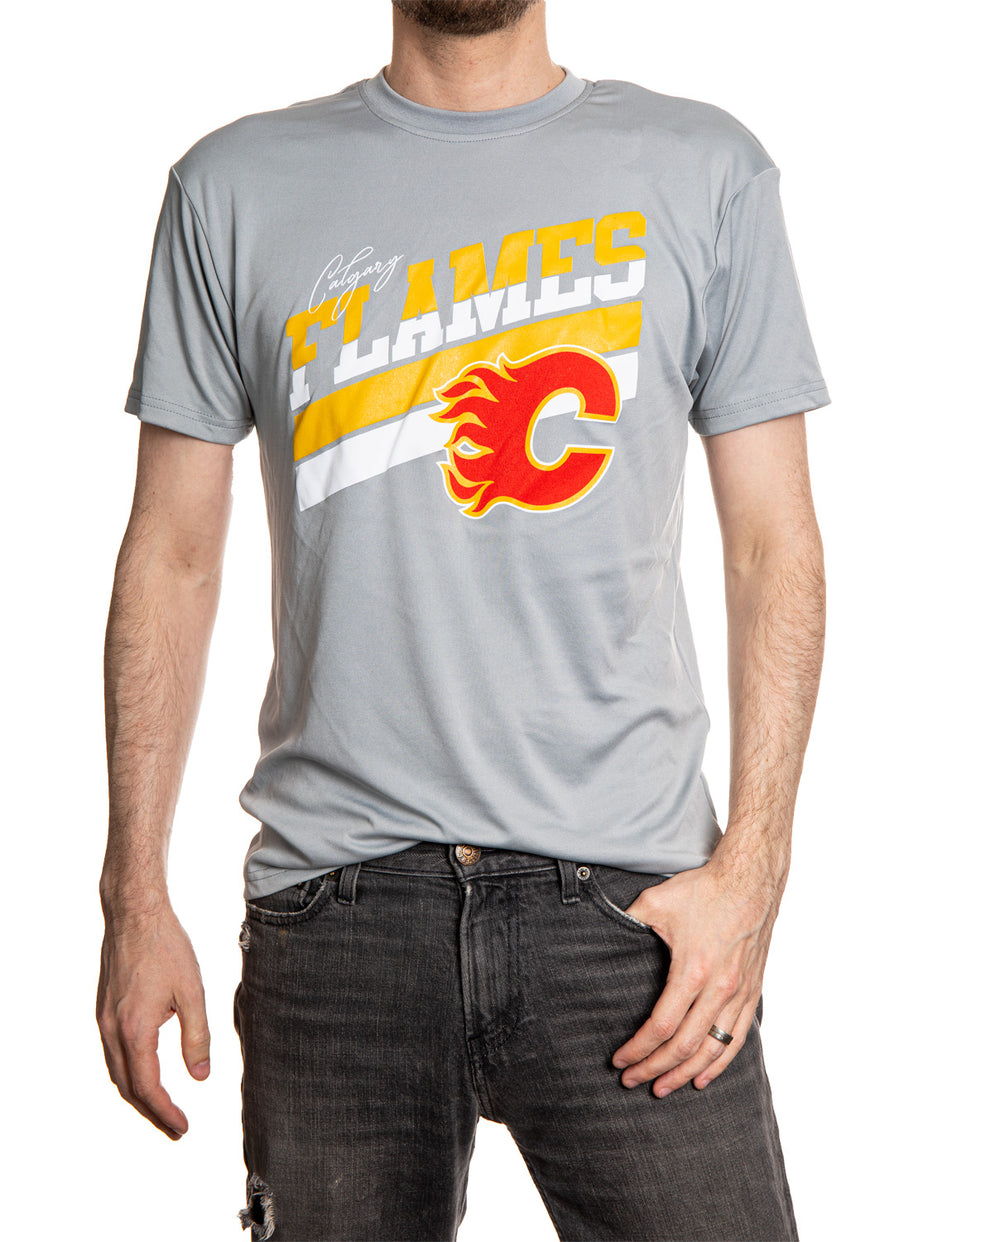 Colorado Avalanche Shoulder Stripe Varsity Inset T-Shirt